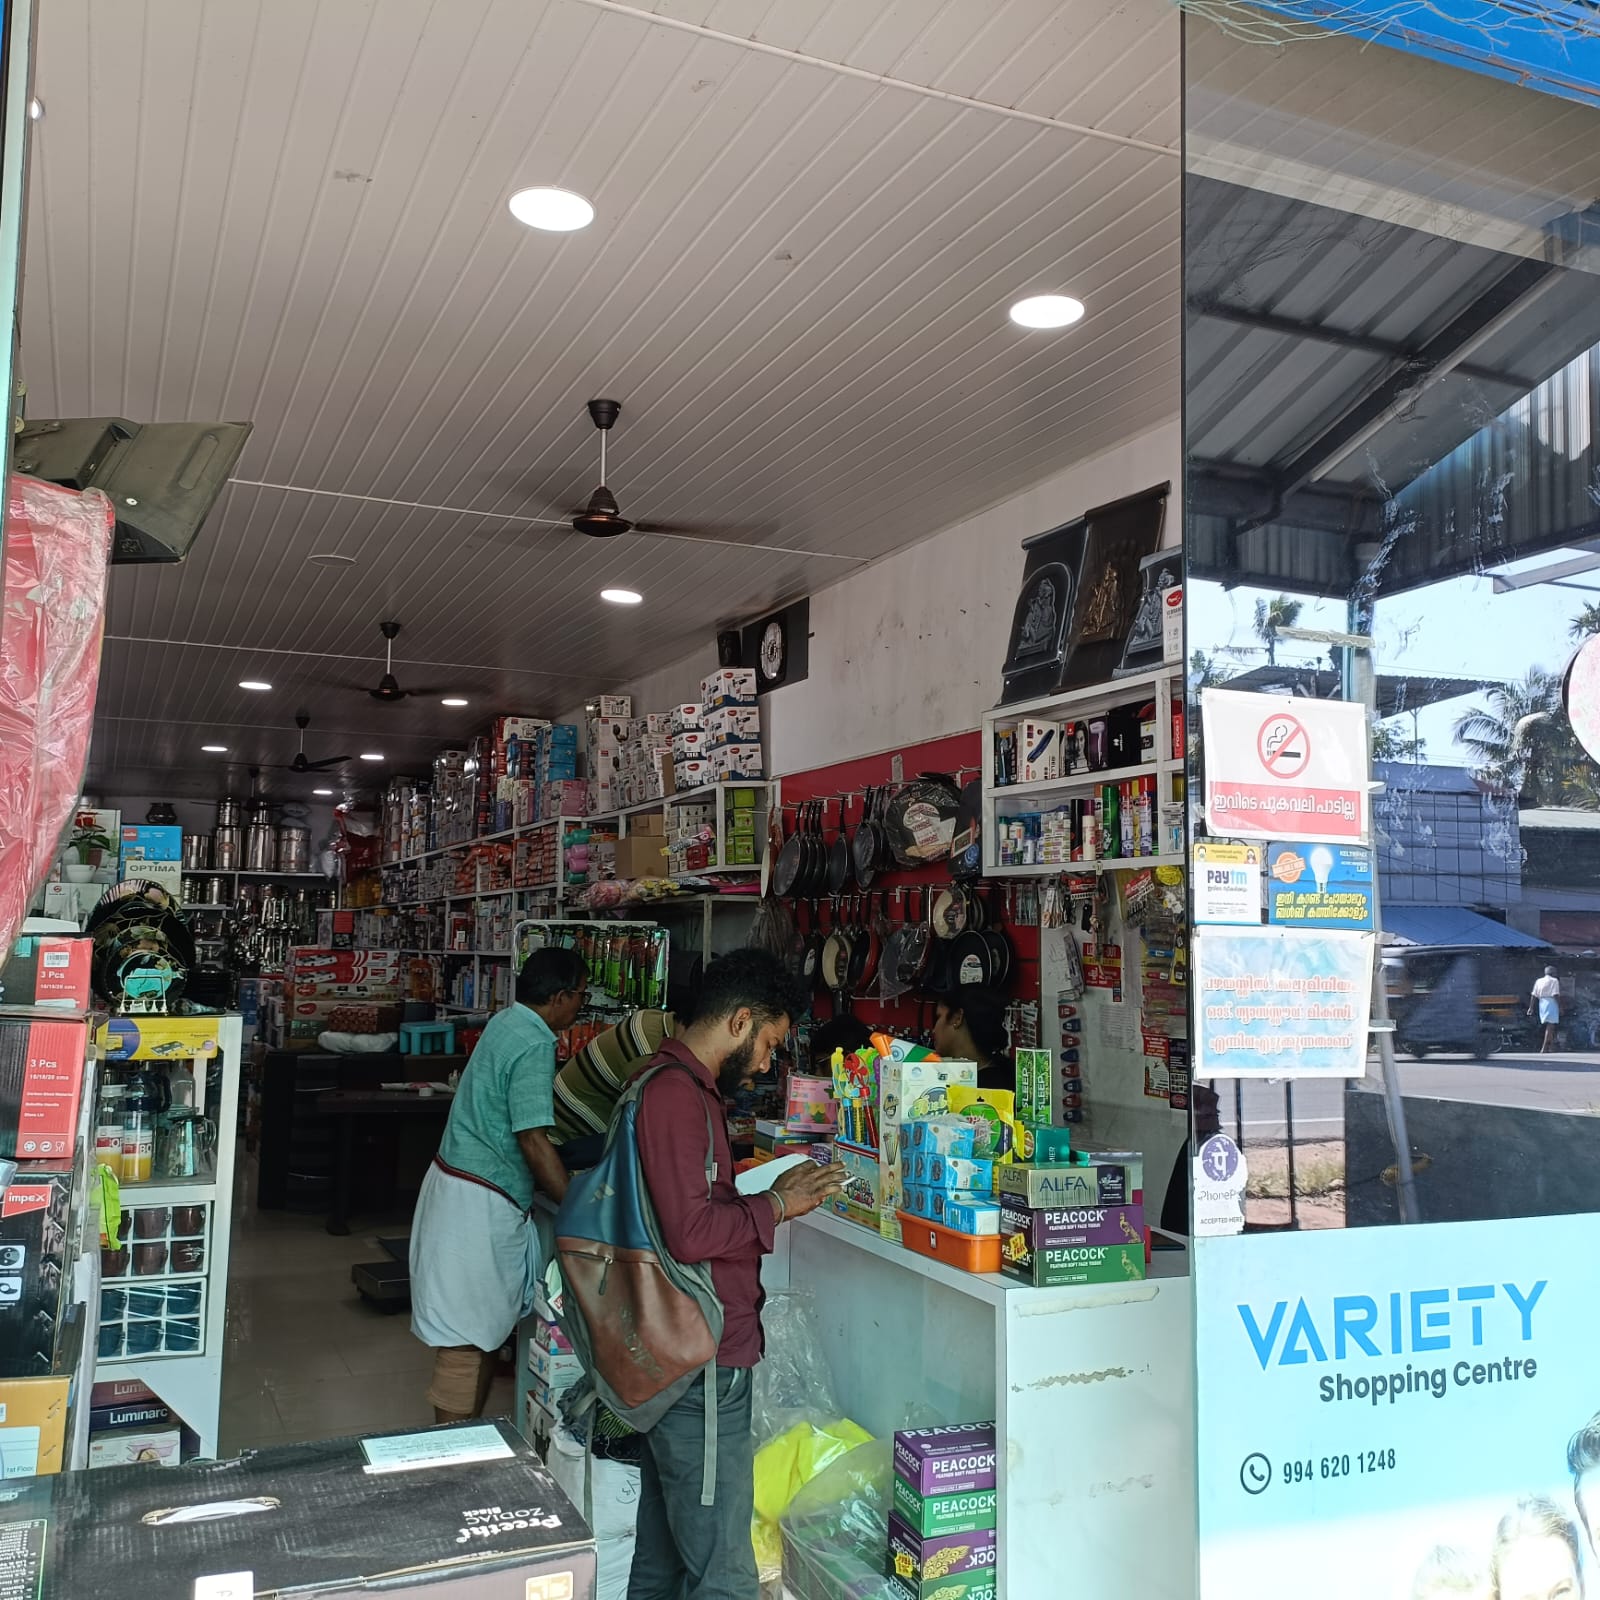 Mathy/Chala(മത്തി) 1 Kg - Online Grocery Store in Thrissur, Supermarket